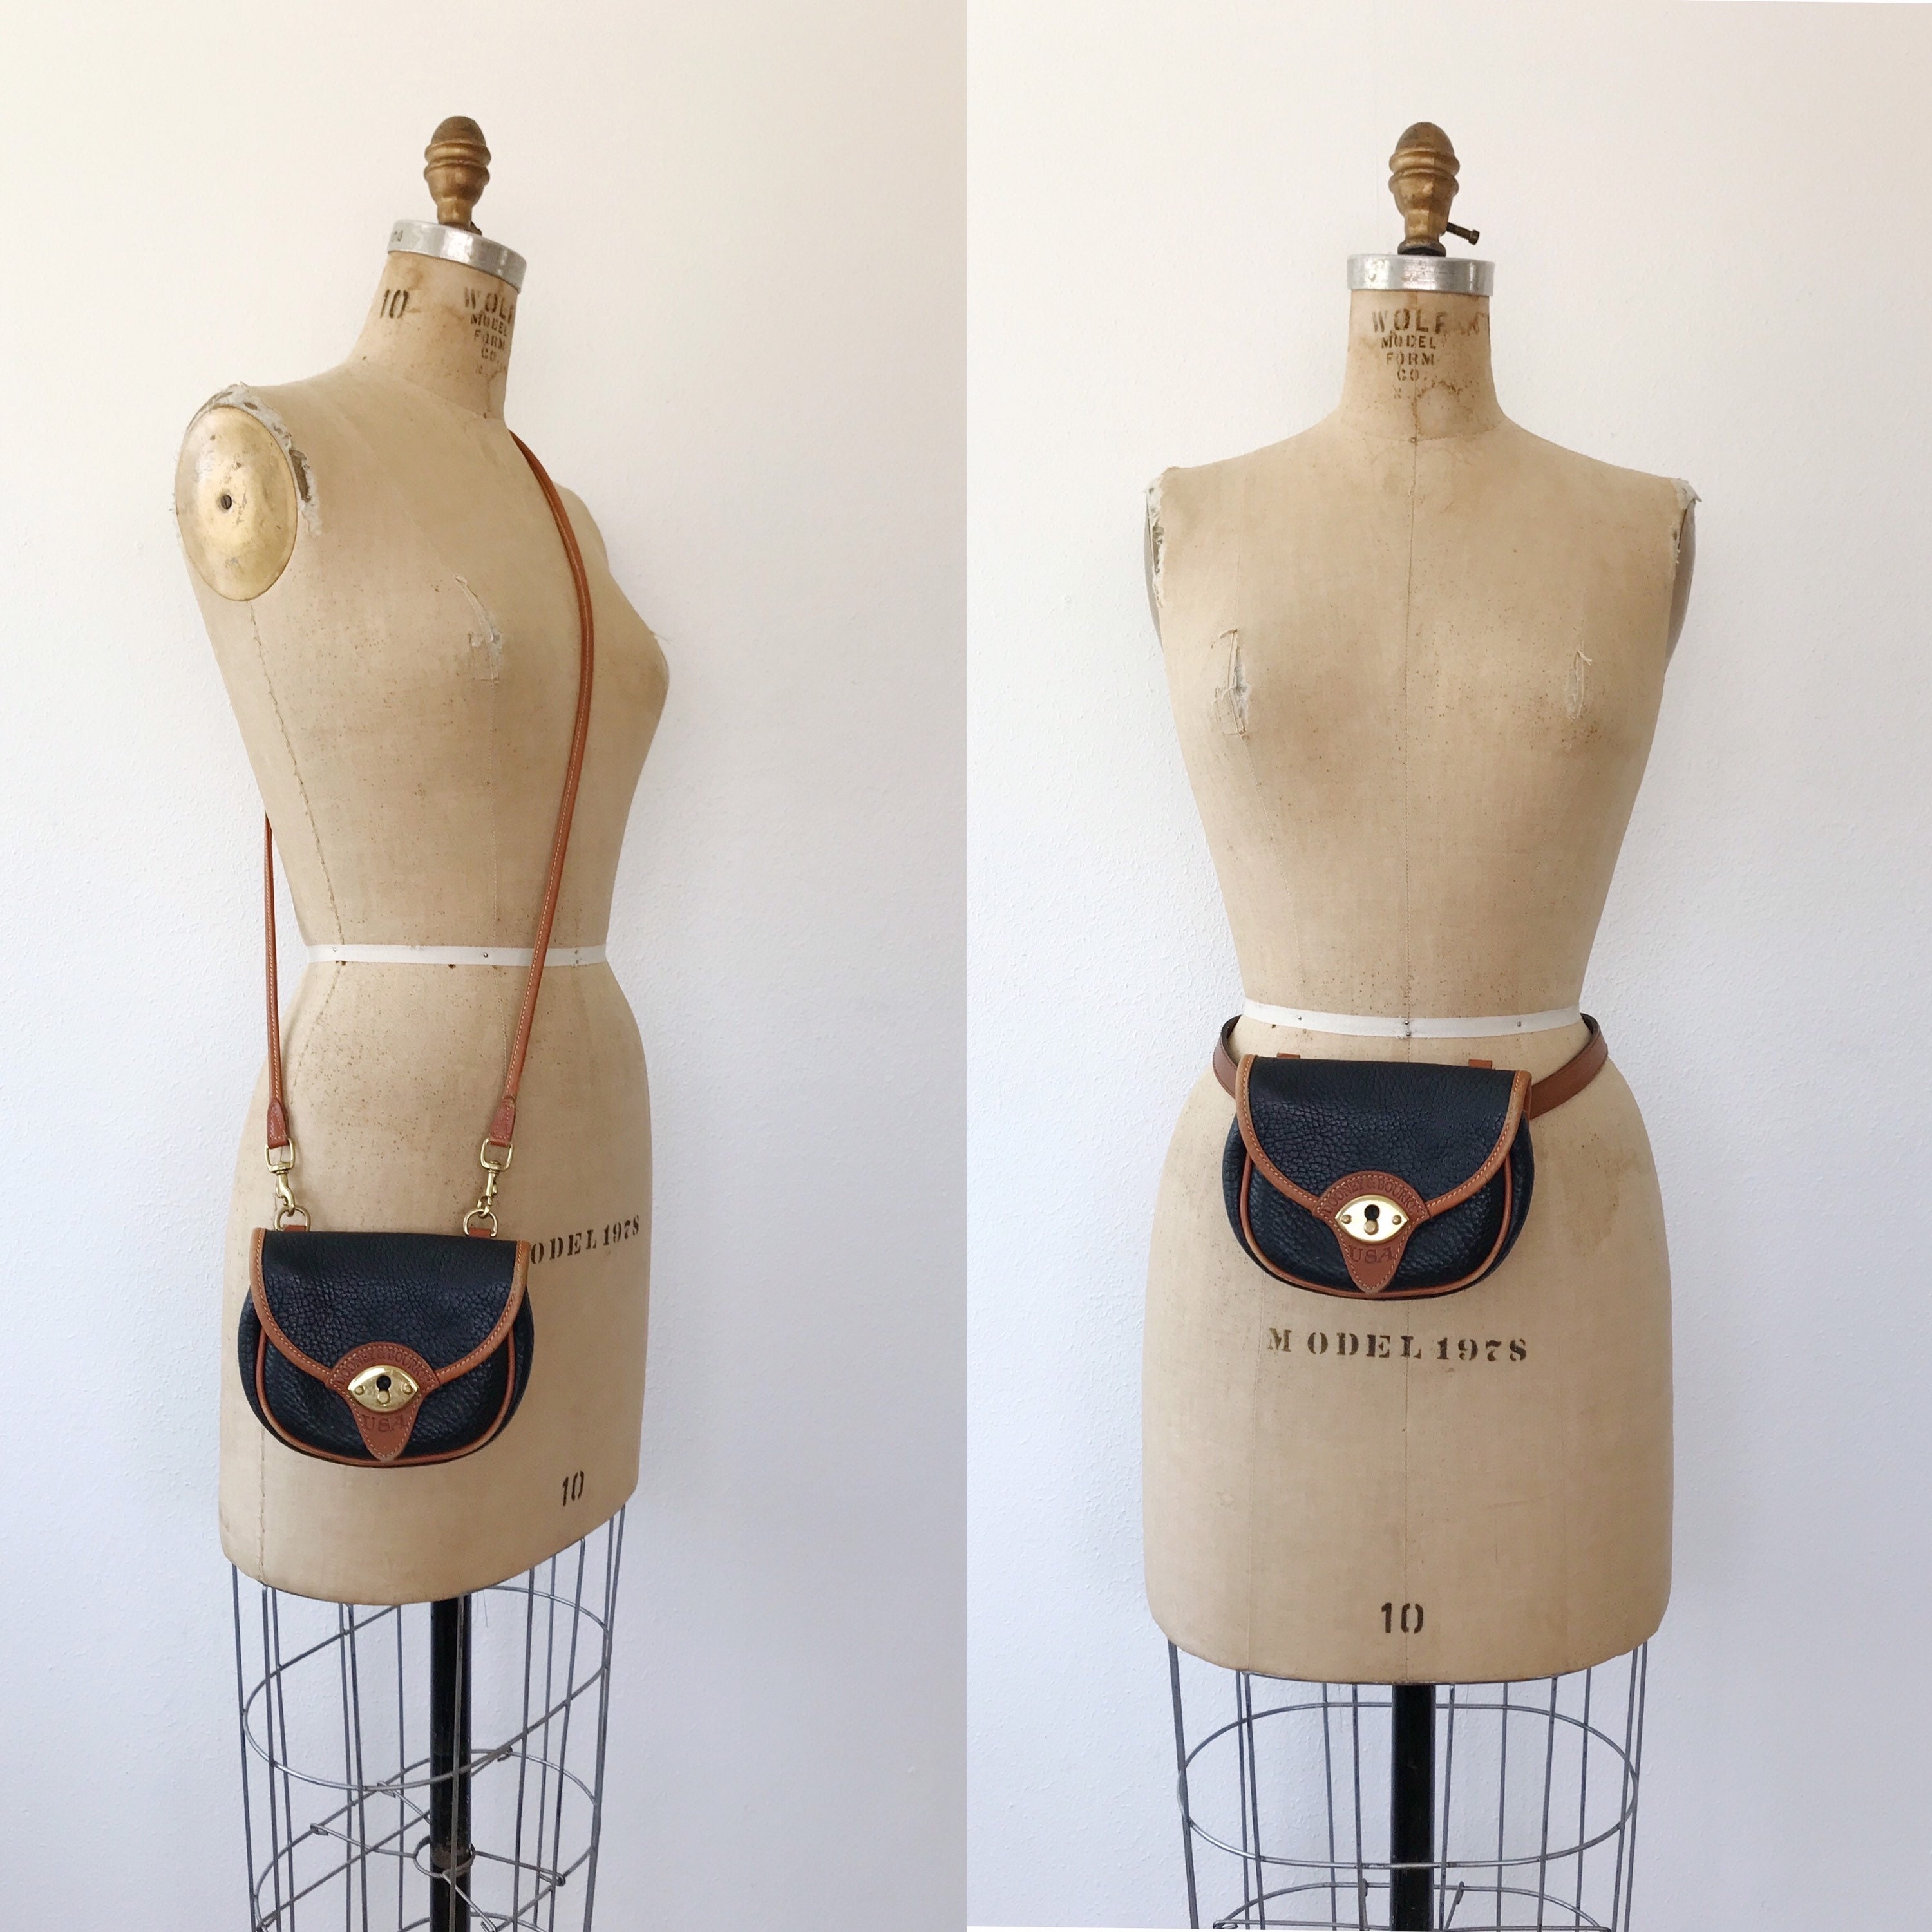 Retro Leather Convertible Flap Crossbody Belt Bag